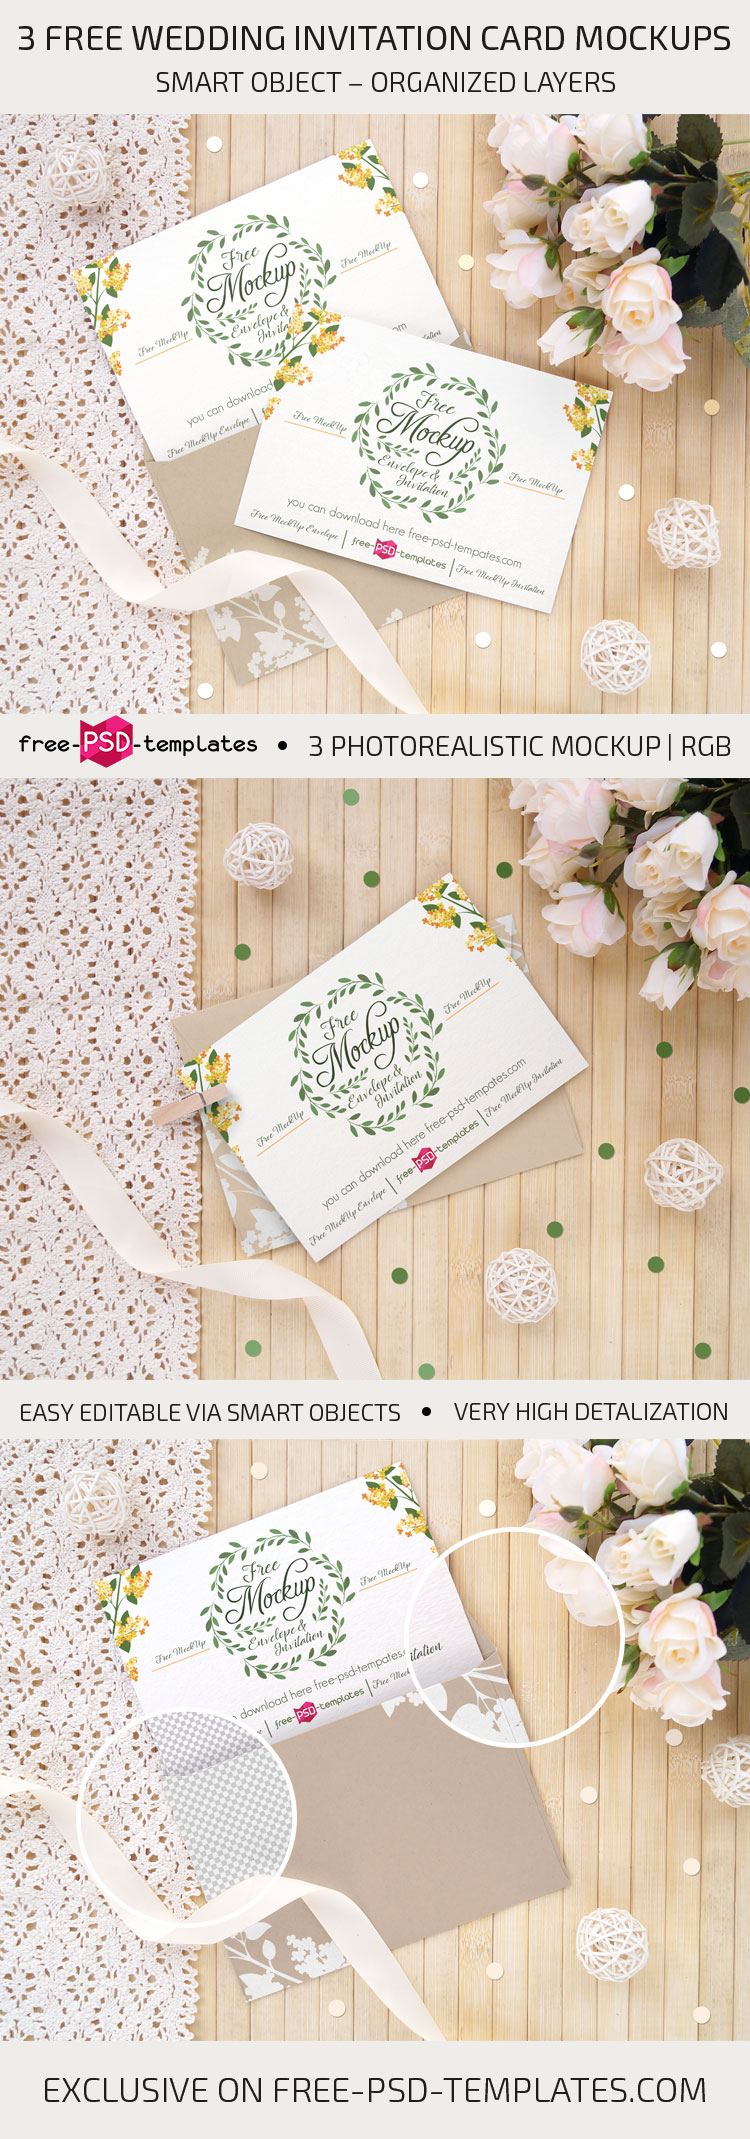 Download 3 Free Wedding Invitation Card Mockups | Free PSD Templates